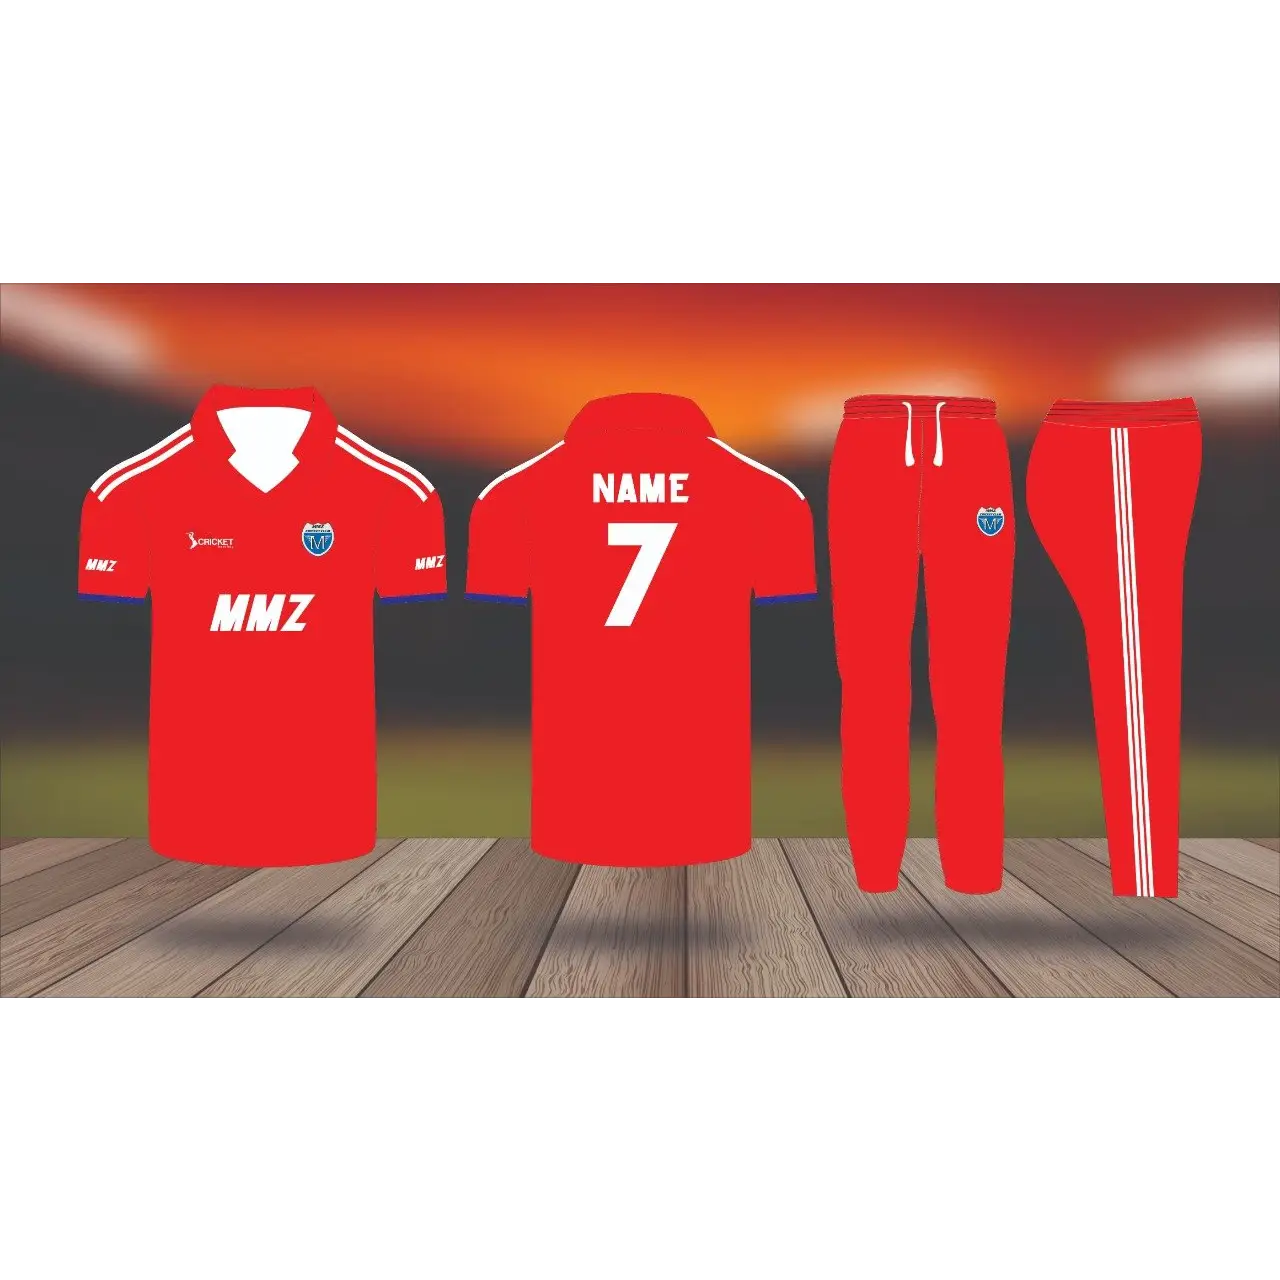 Cricket Uniform Jerseys Shirt Trouser Custom Made Red Black MMZ - CLOTHING CUSTOM